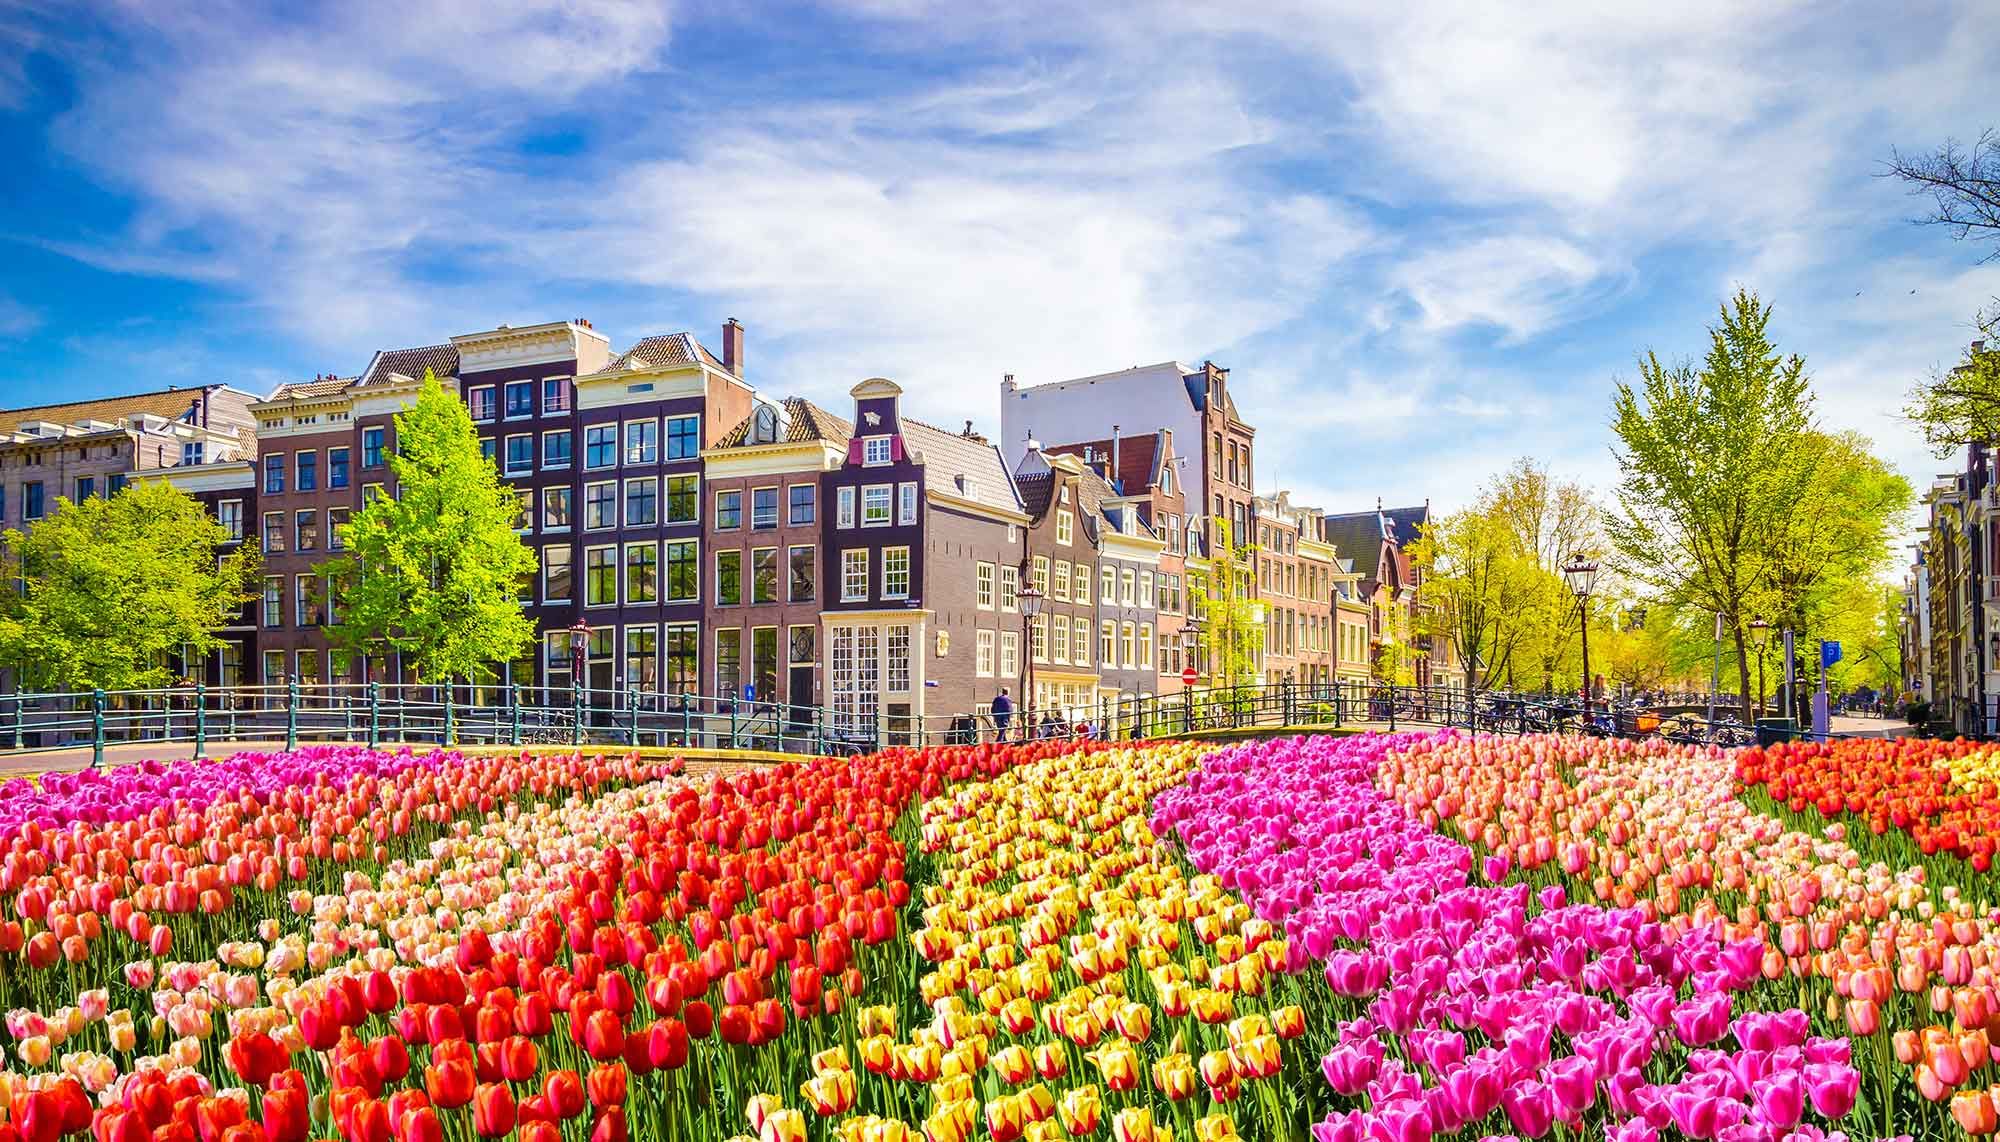 Amsterdam - Discover Dam Square##Discover Rijksmuseum##Discover Red Light District